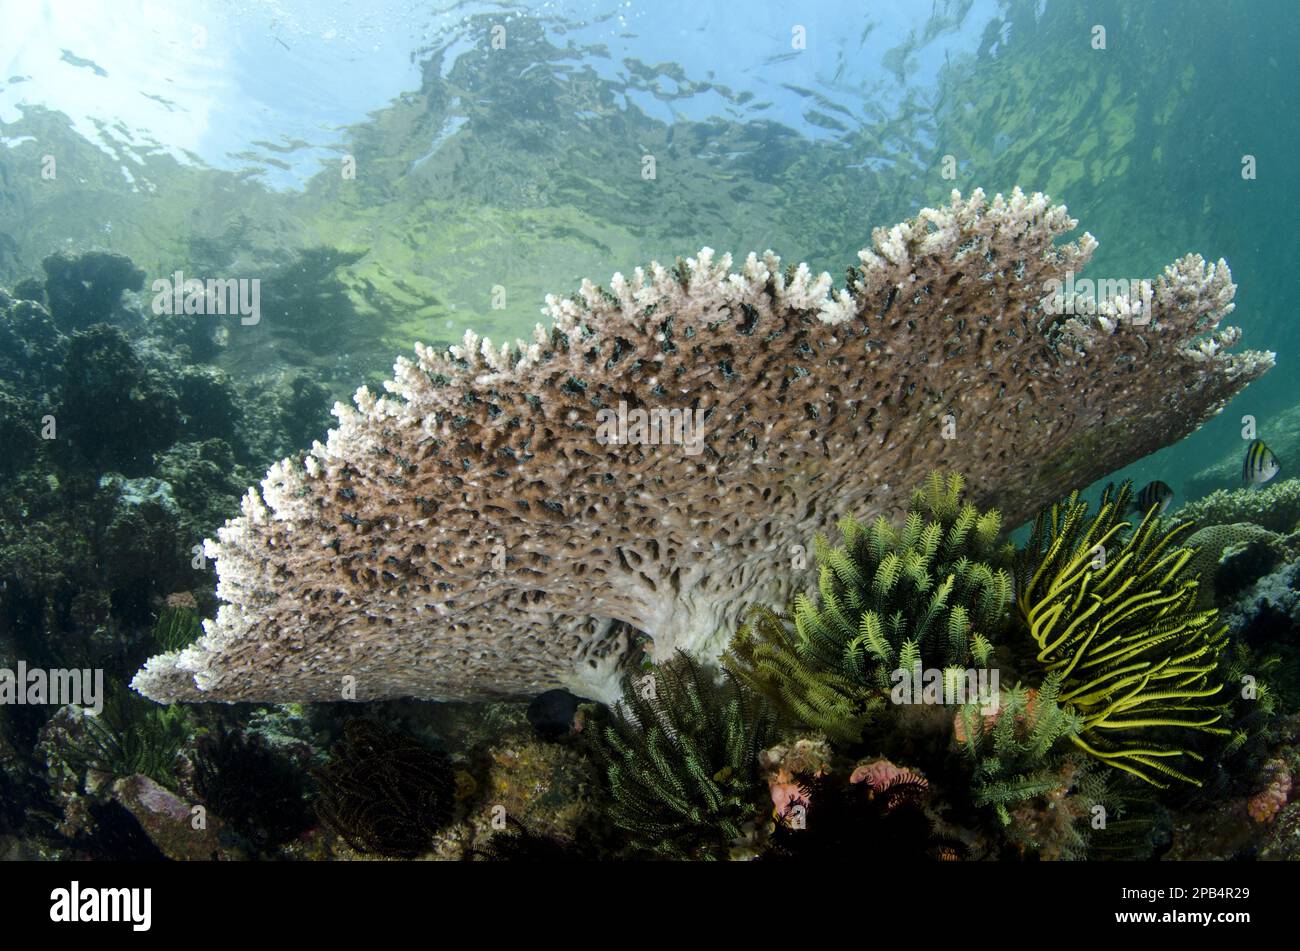 Table coral in reef habitat, Horseshoe Bay, Nusa Kode, Rinca Island, Komodo N. P. Lesser Sunda Islands, Indonesia, Asia Stock Photo